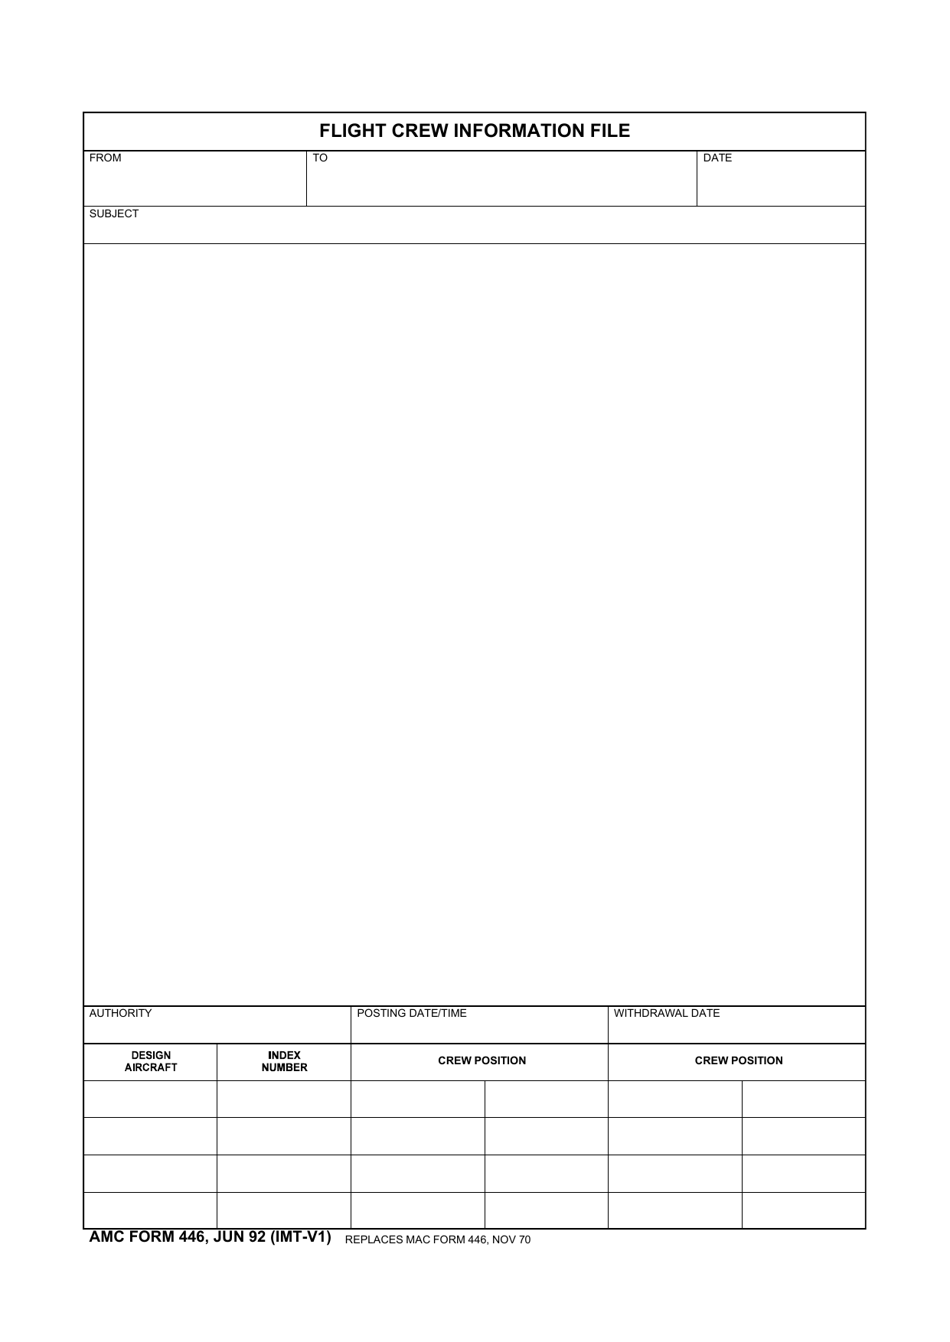 AMC Form 446 Flight Crew Information File, Page 1